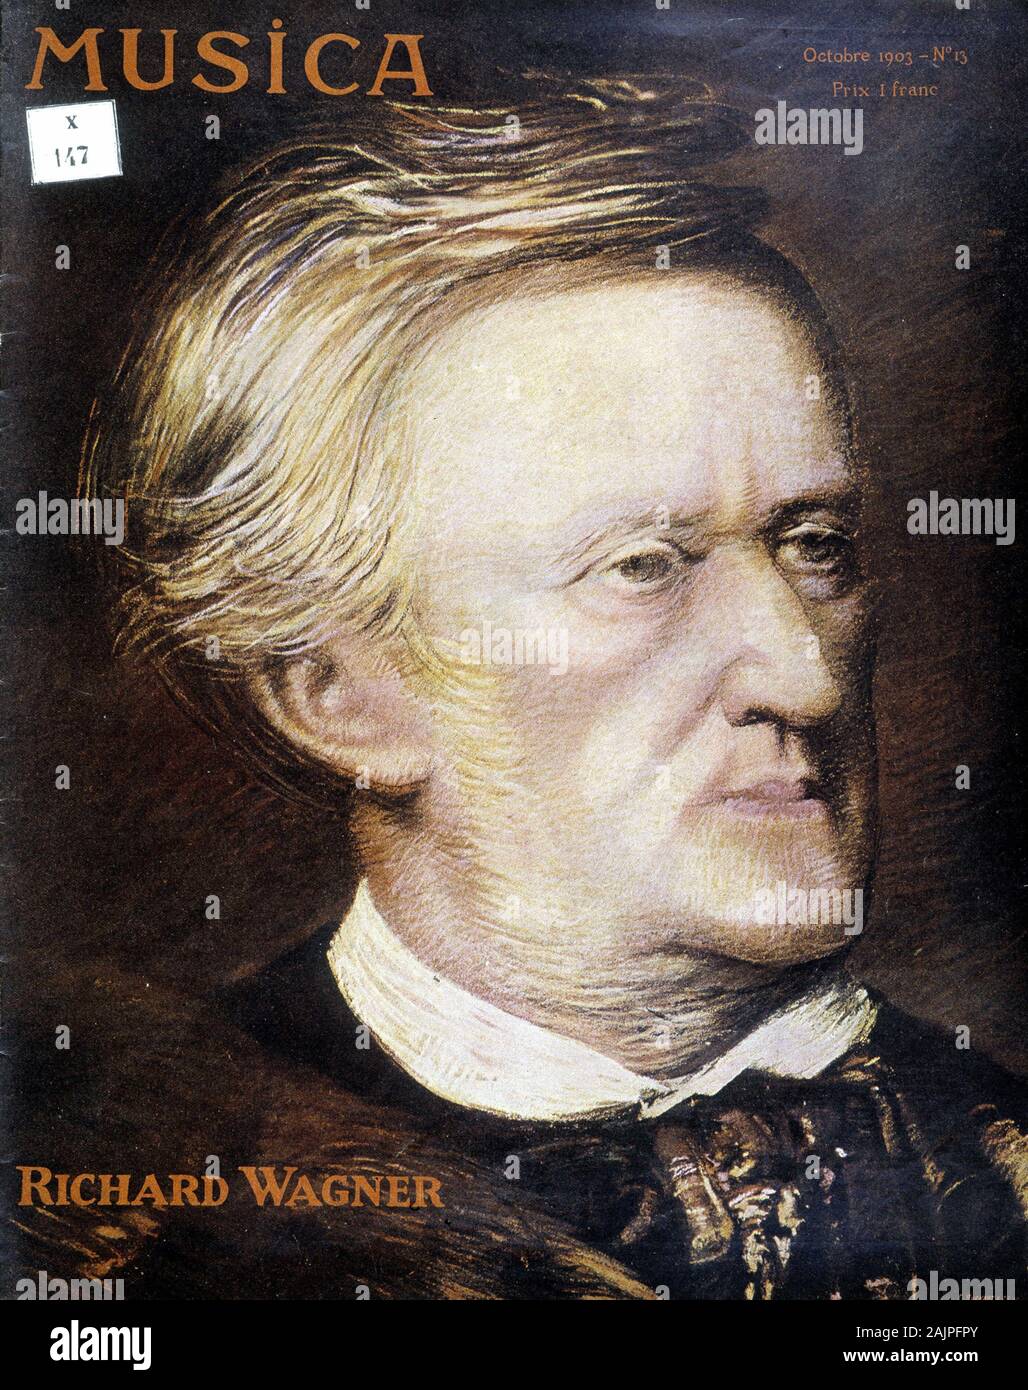 Richard Wagner - in 'Musica', octobre 1903 Stock Photo